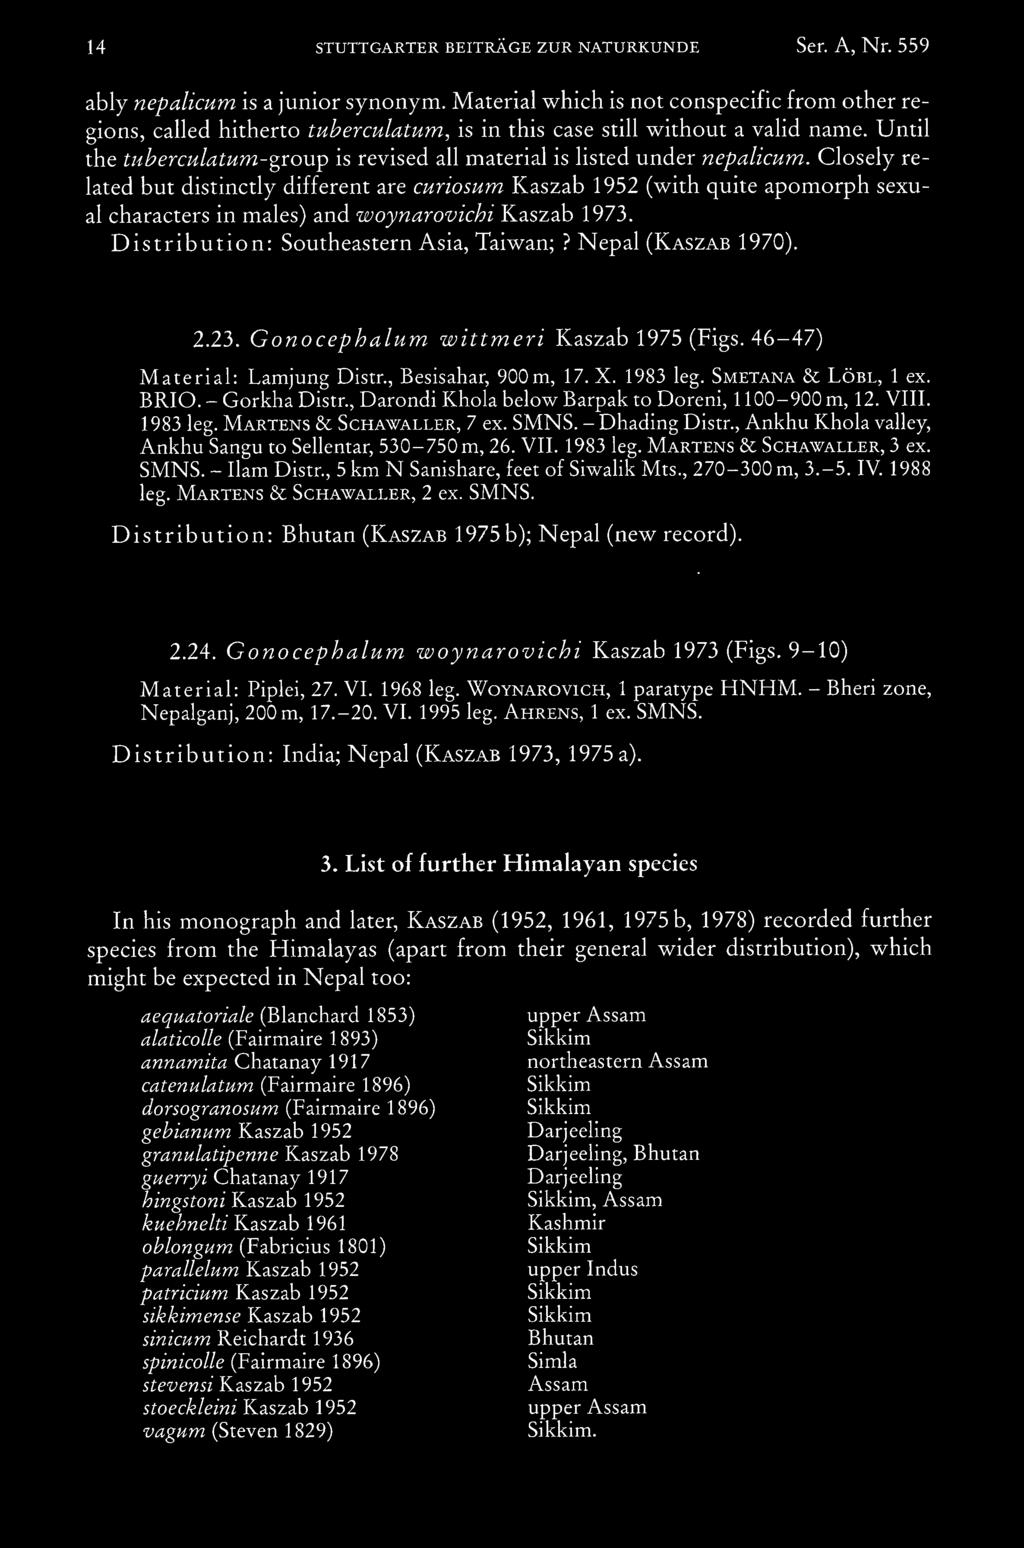 Nepal (Kaszab 1970). 2.23. Gonocephalum wittmeri Kaszab 1975 (Figs. 46-47) Material: Lamjung Distr., Besisahar, 900 m, 17. X. 1983 leg. Smetana & Löbl, 1 BRIO. - Gorkha Distr.